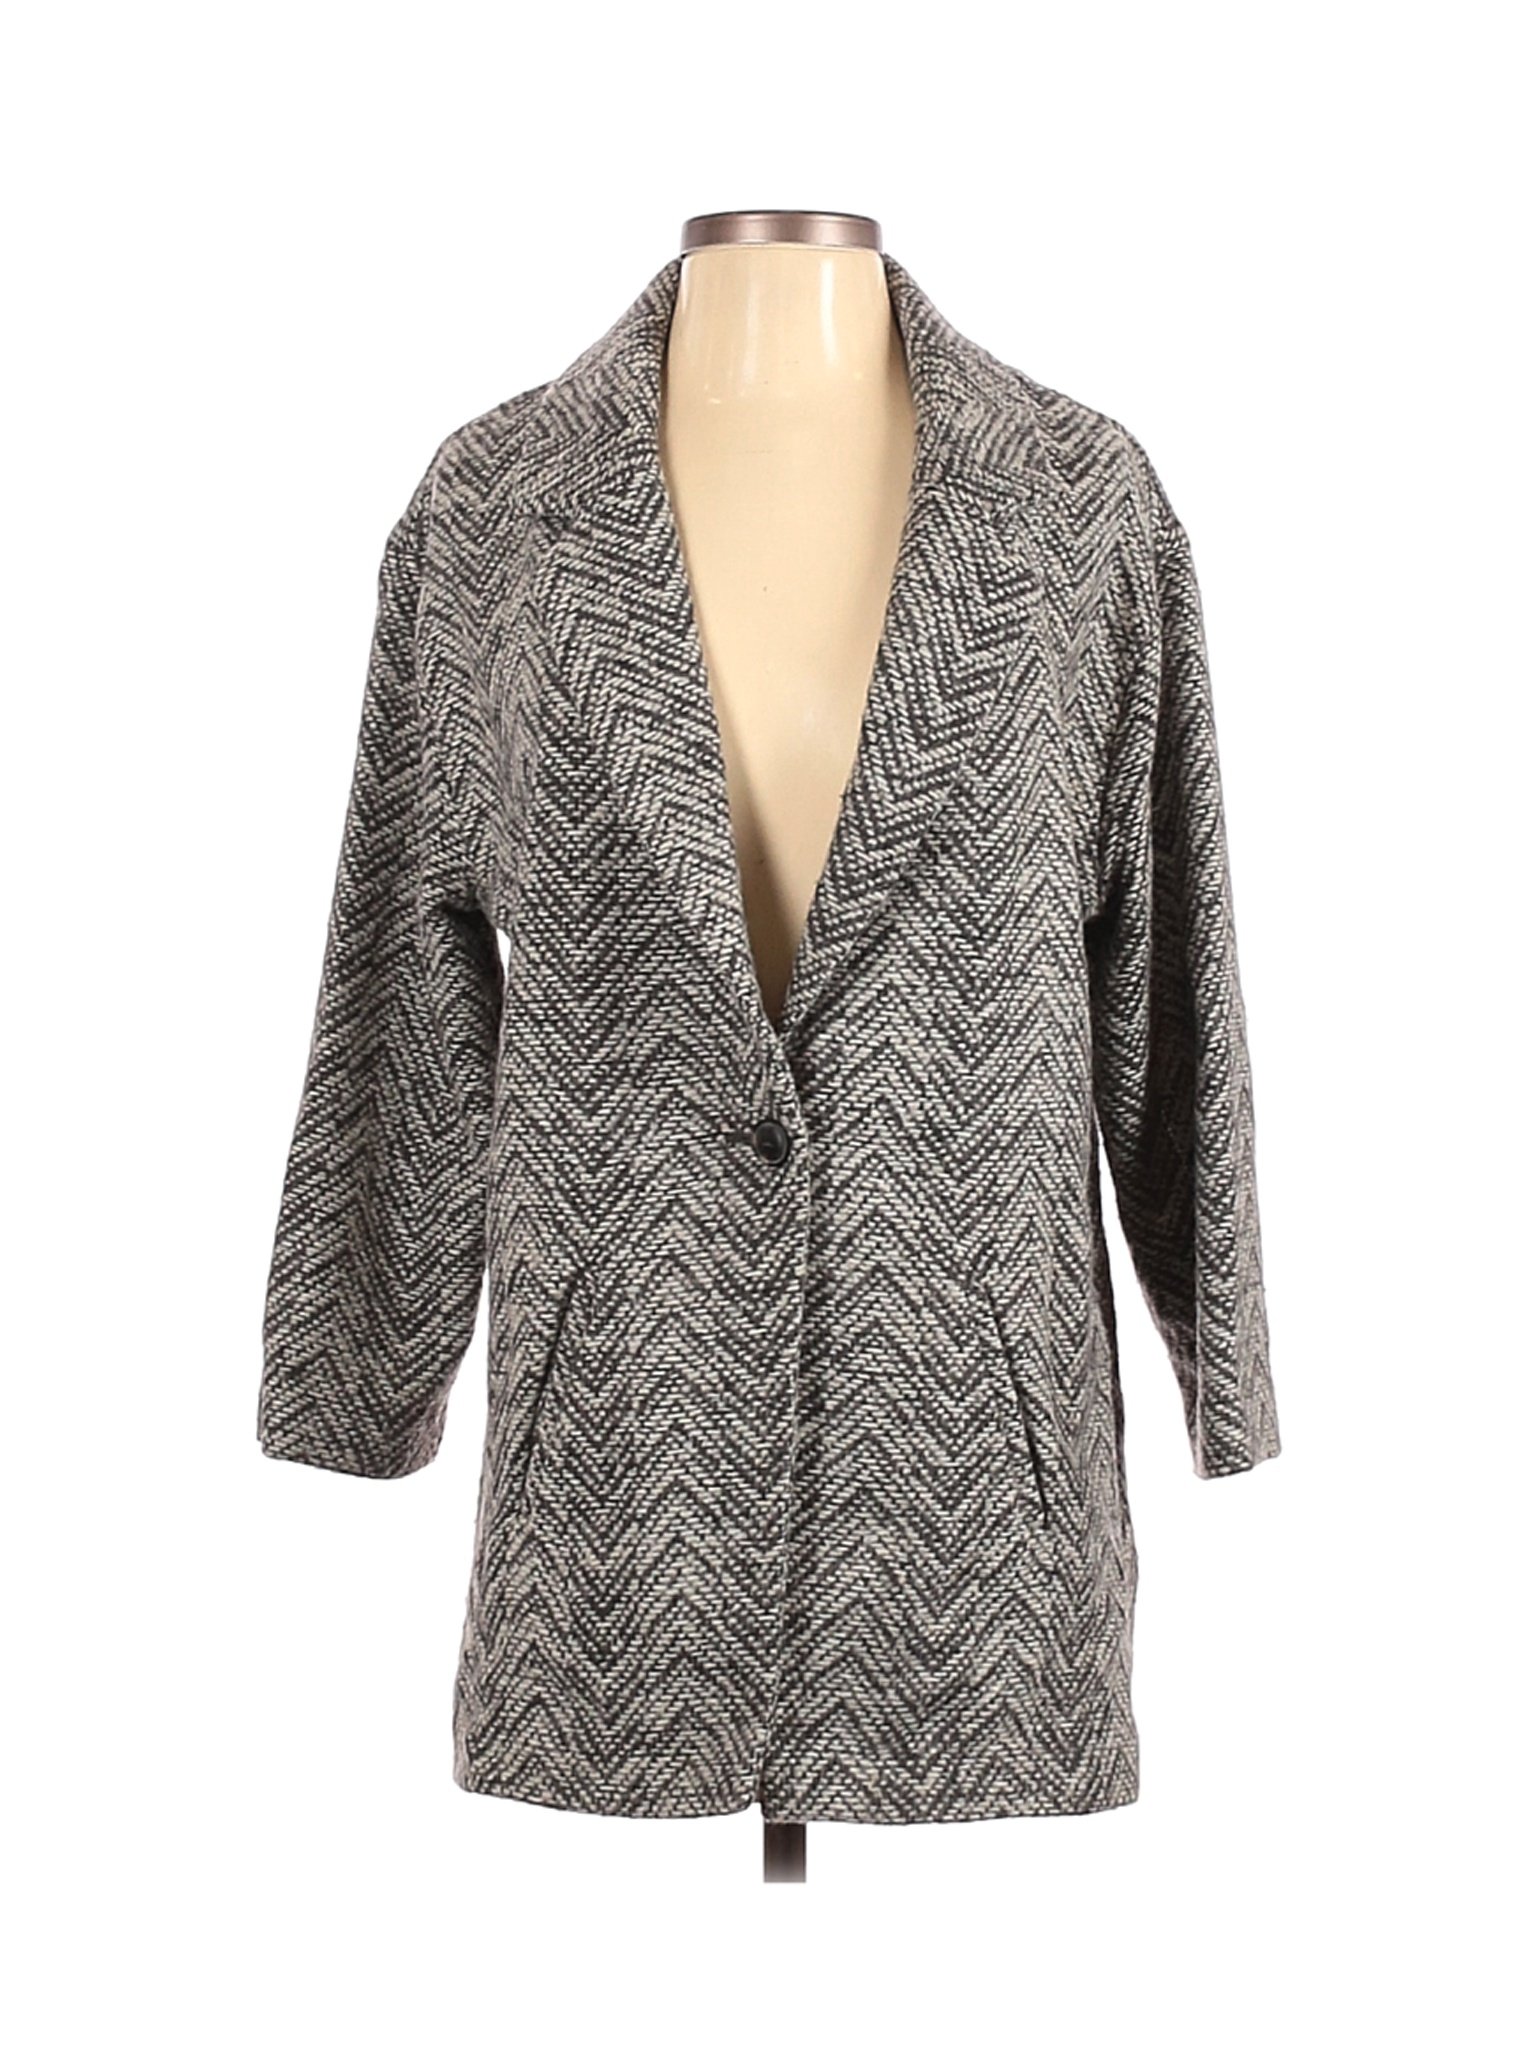 American Eagle Outfitters Women Gray Blazer XS | eBay